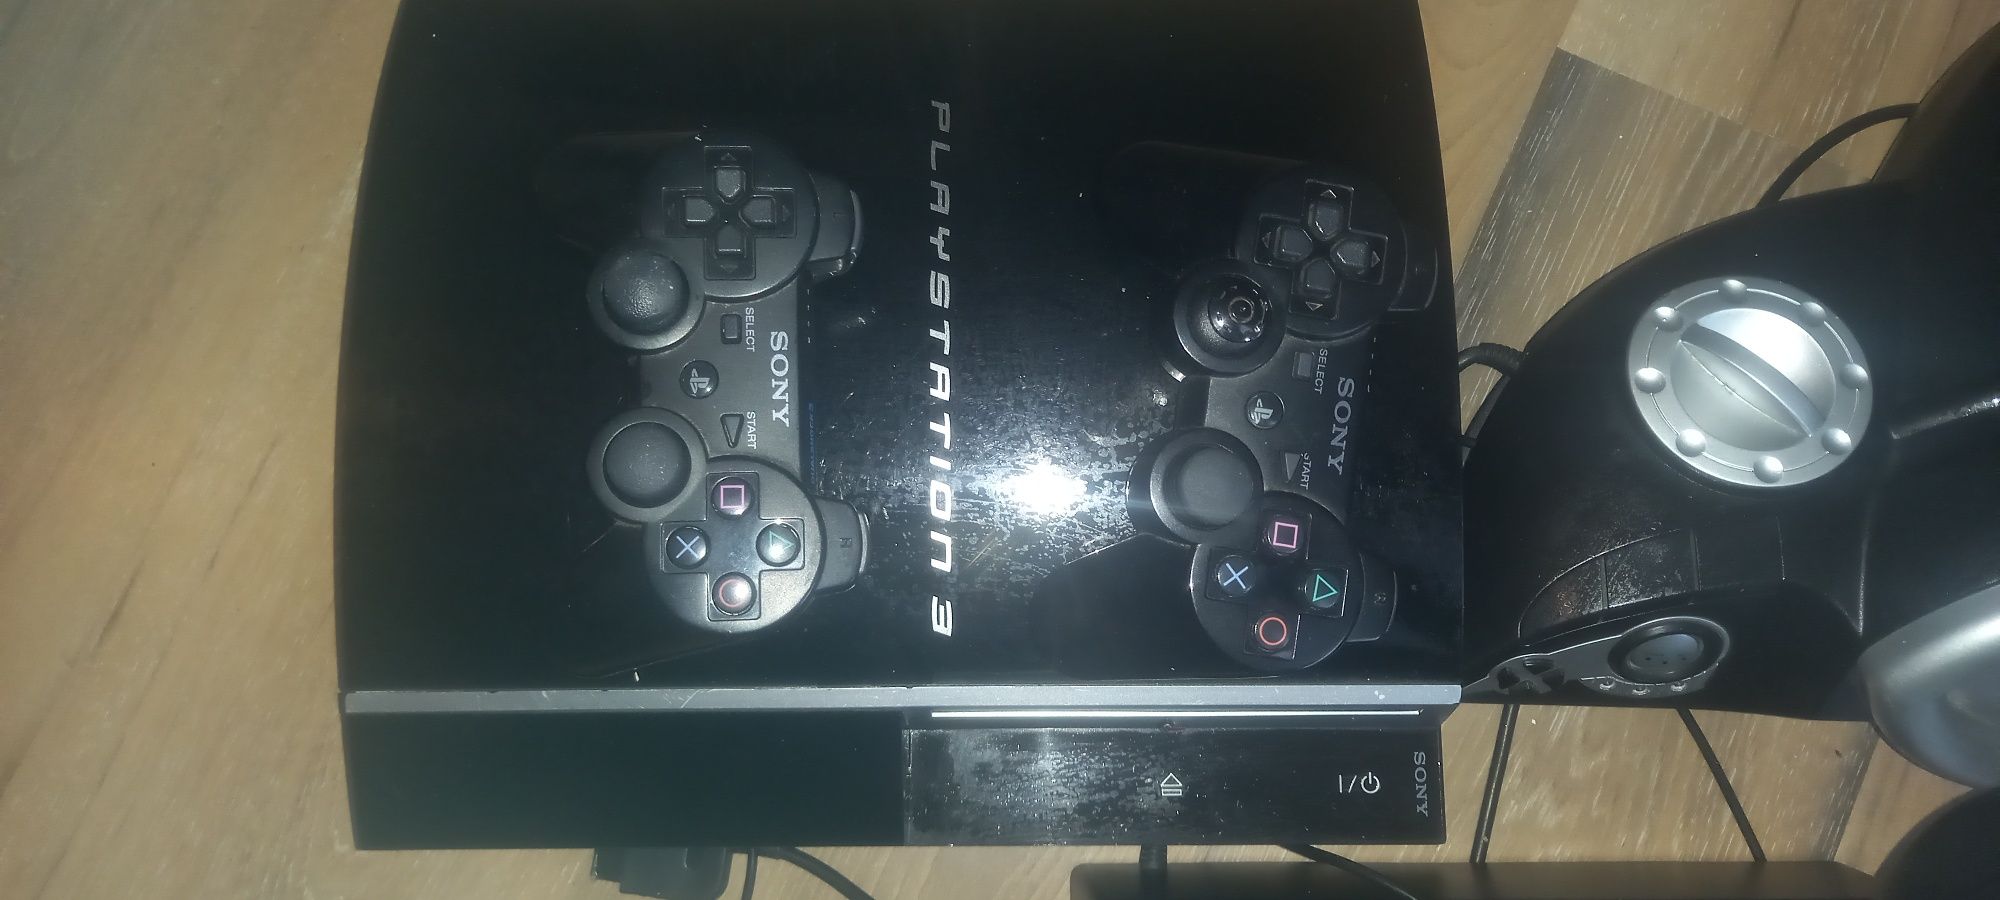 PlayStation 3 i kierownica